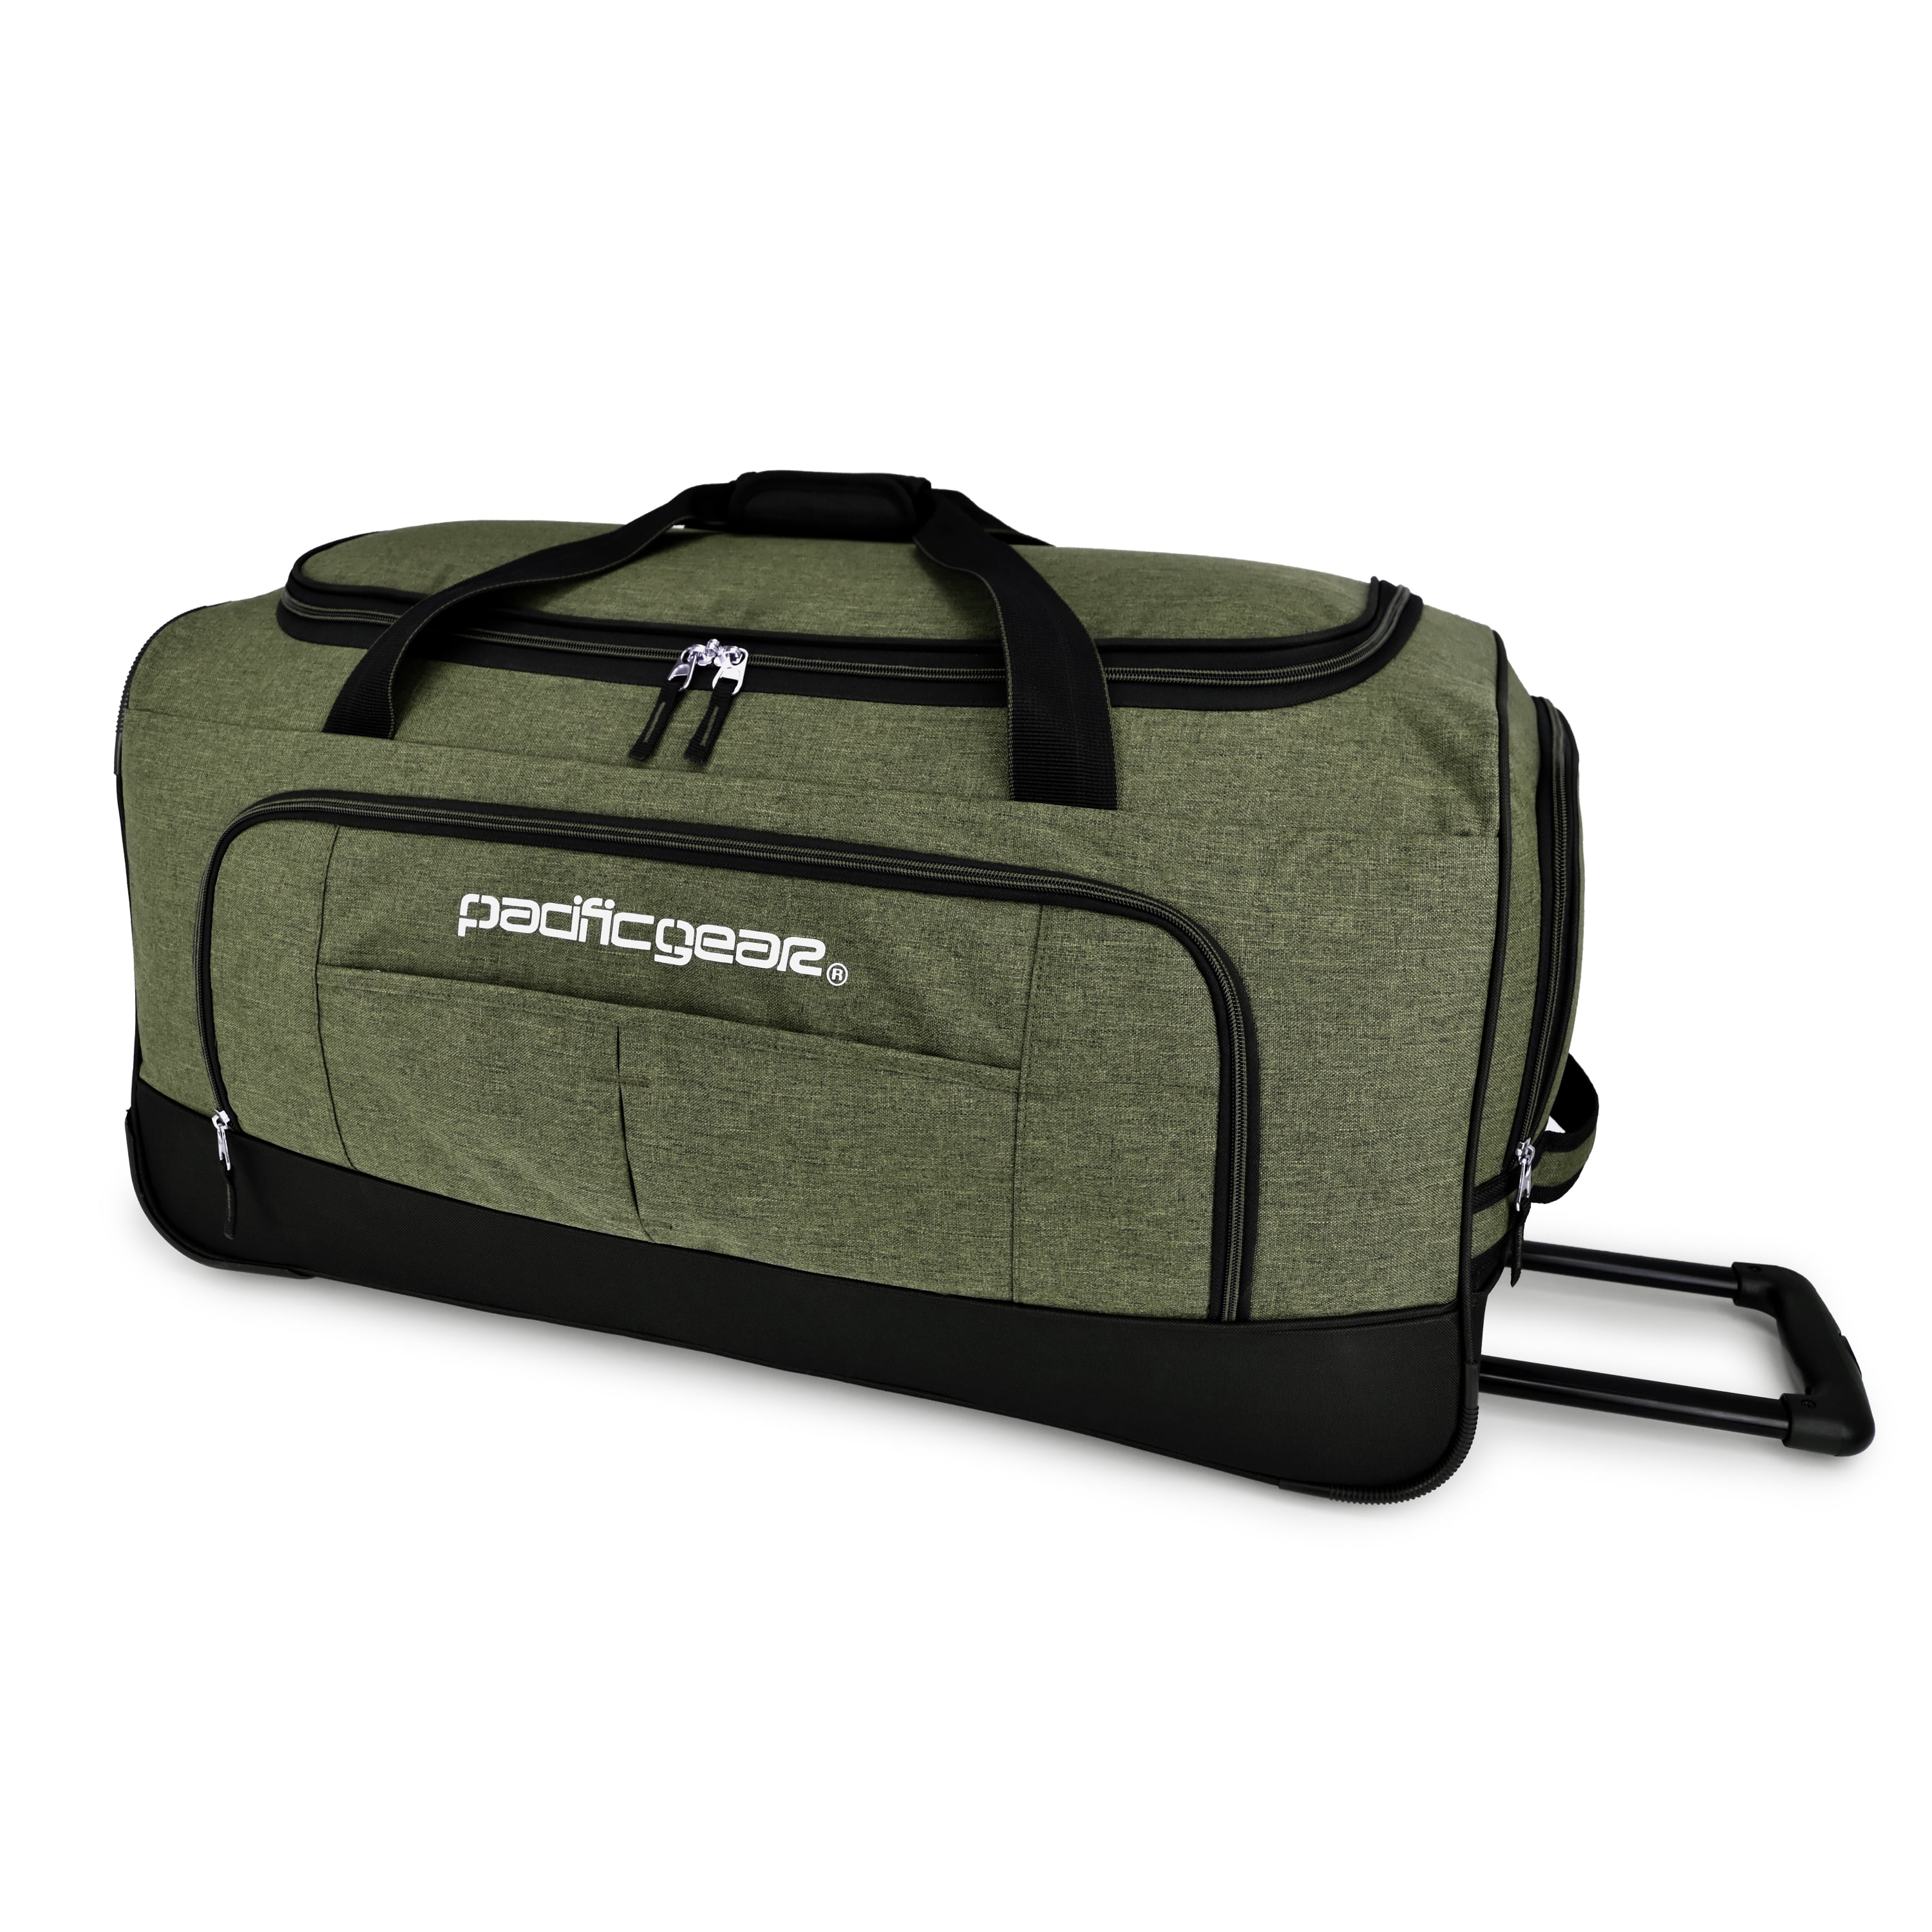 Pacific Gear Keystone 30 Rolling Duffel Bag Olive